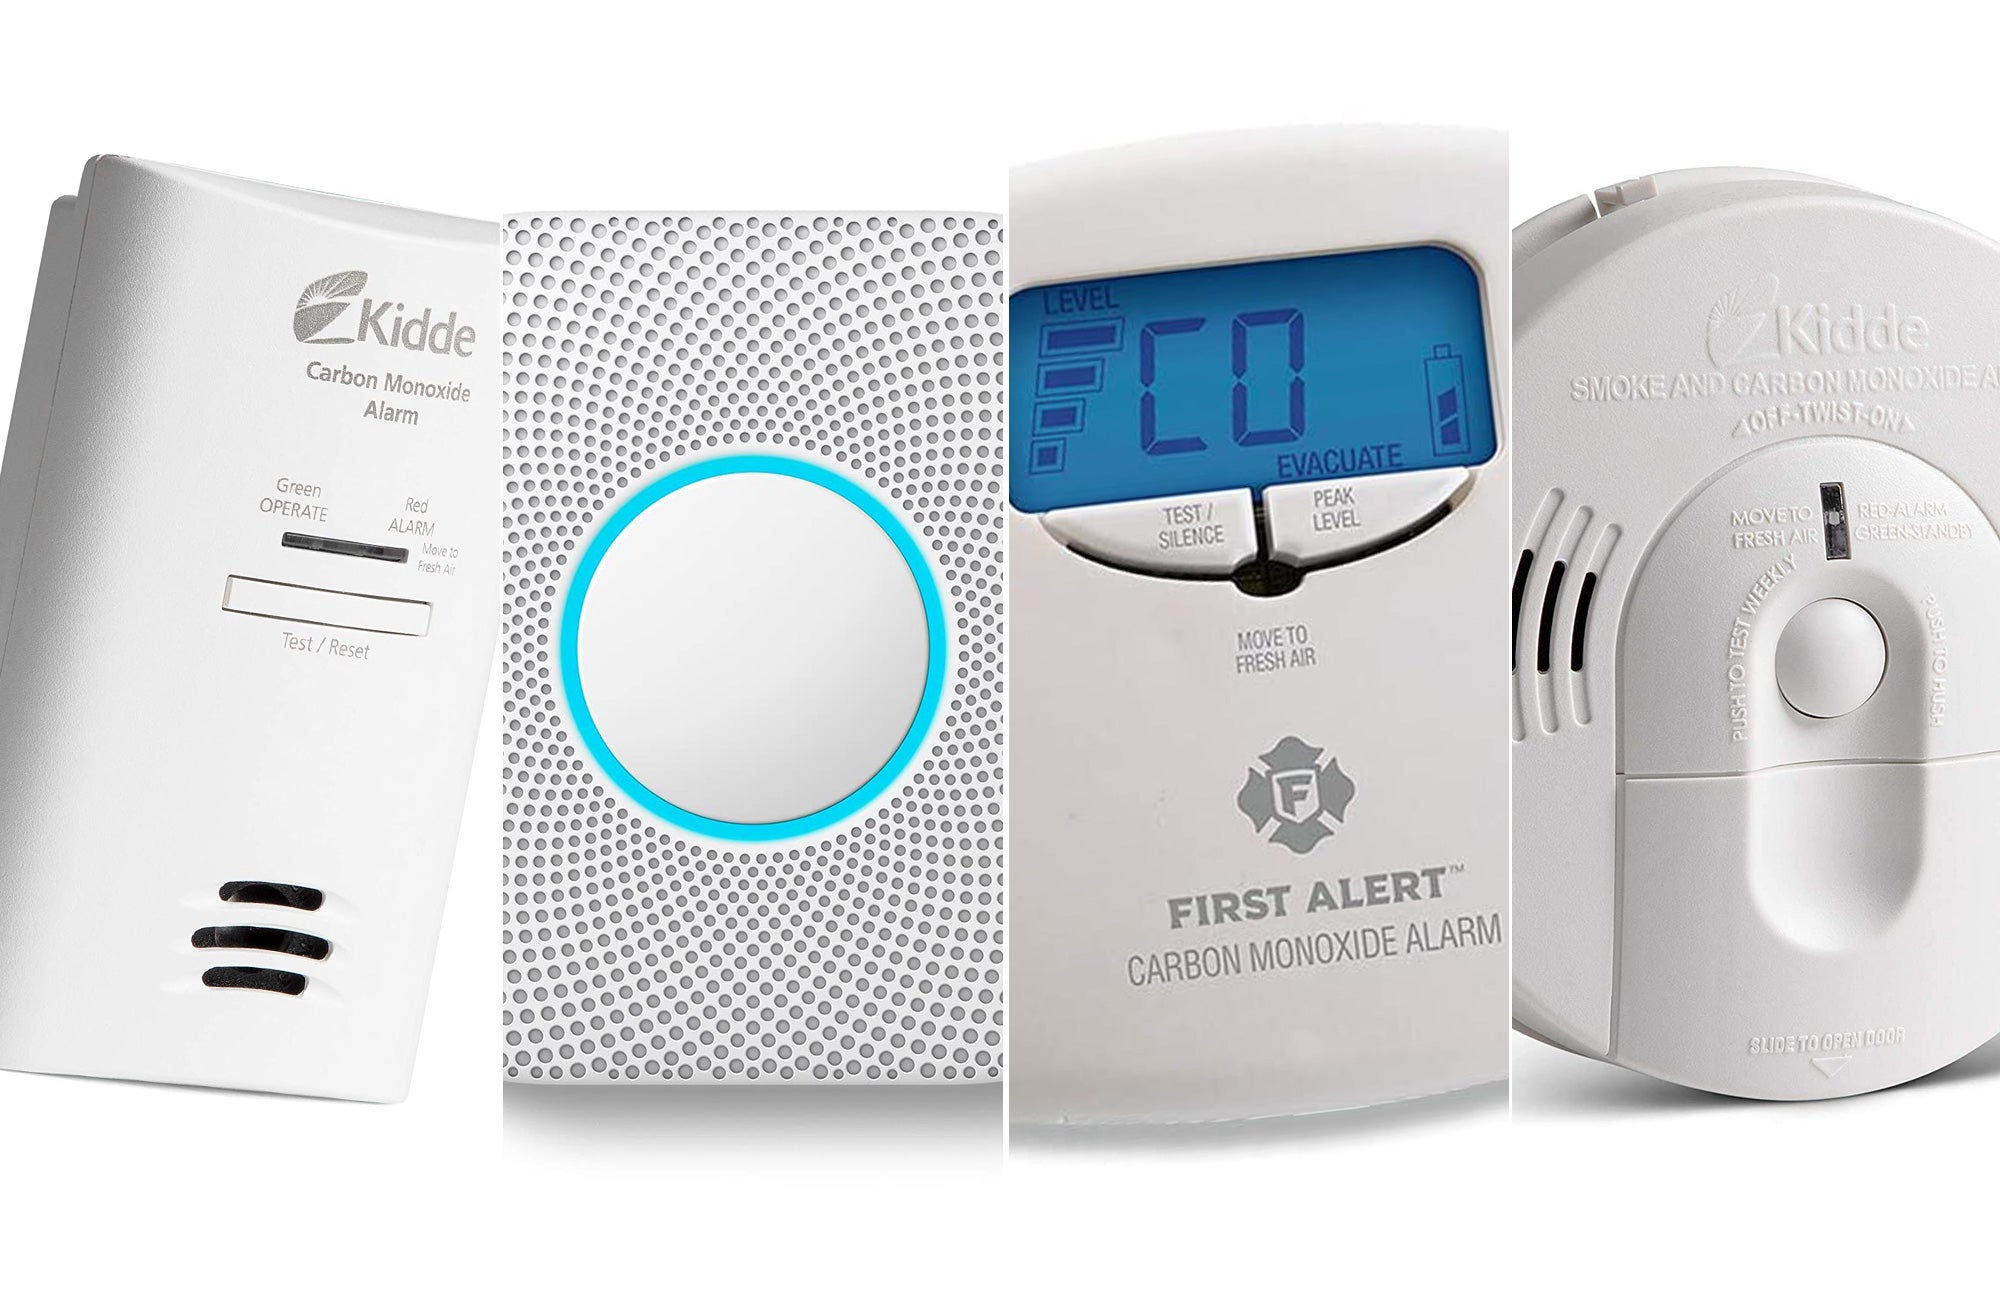 Kidde Nighthawk Carbon Monoxide Alarm Review: Simple Safety